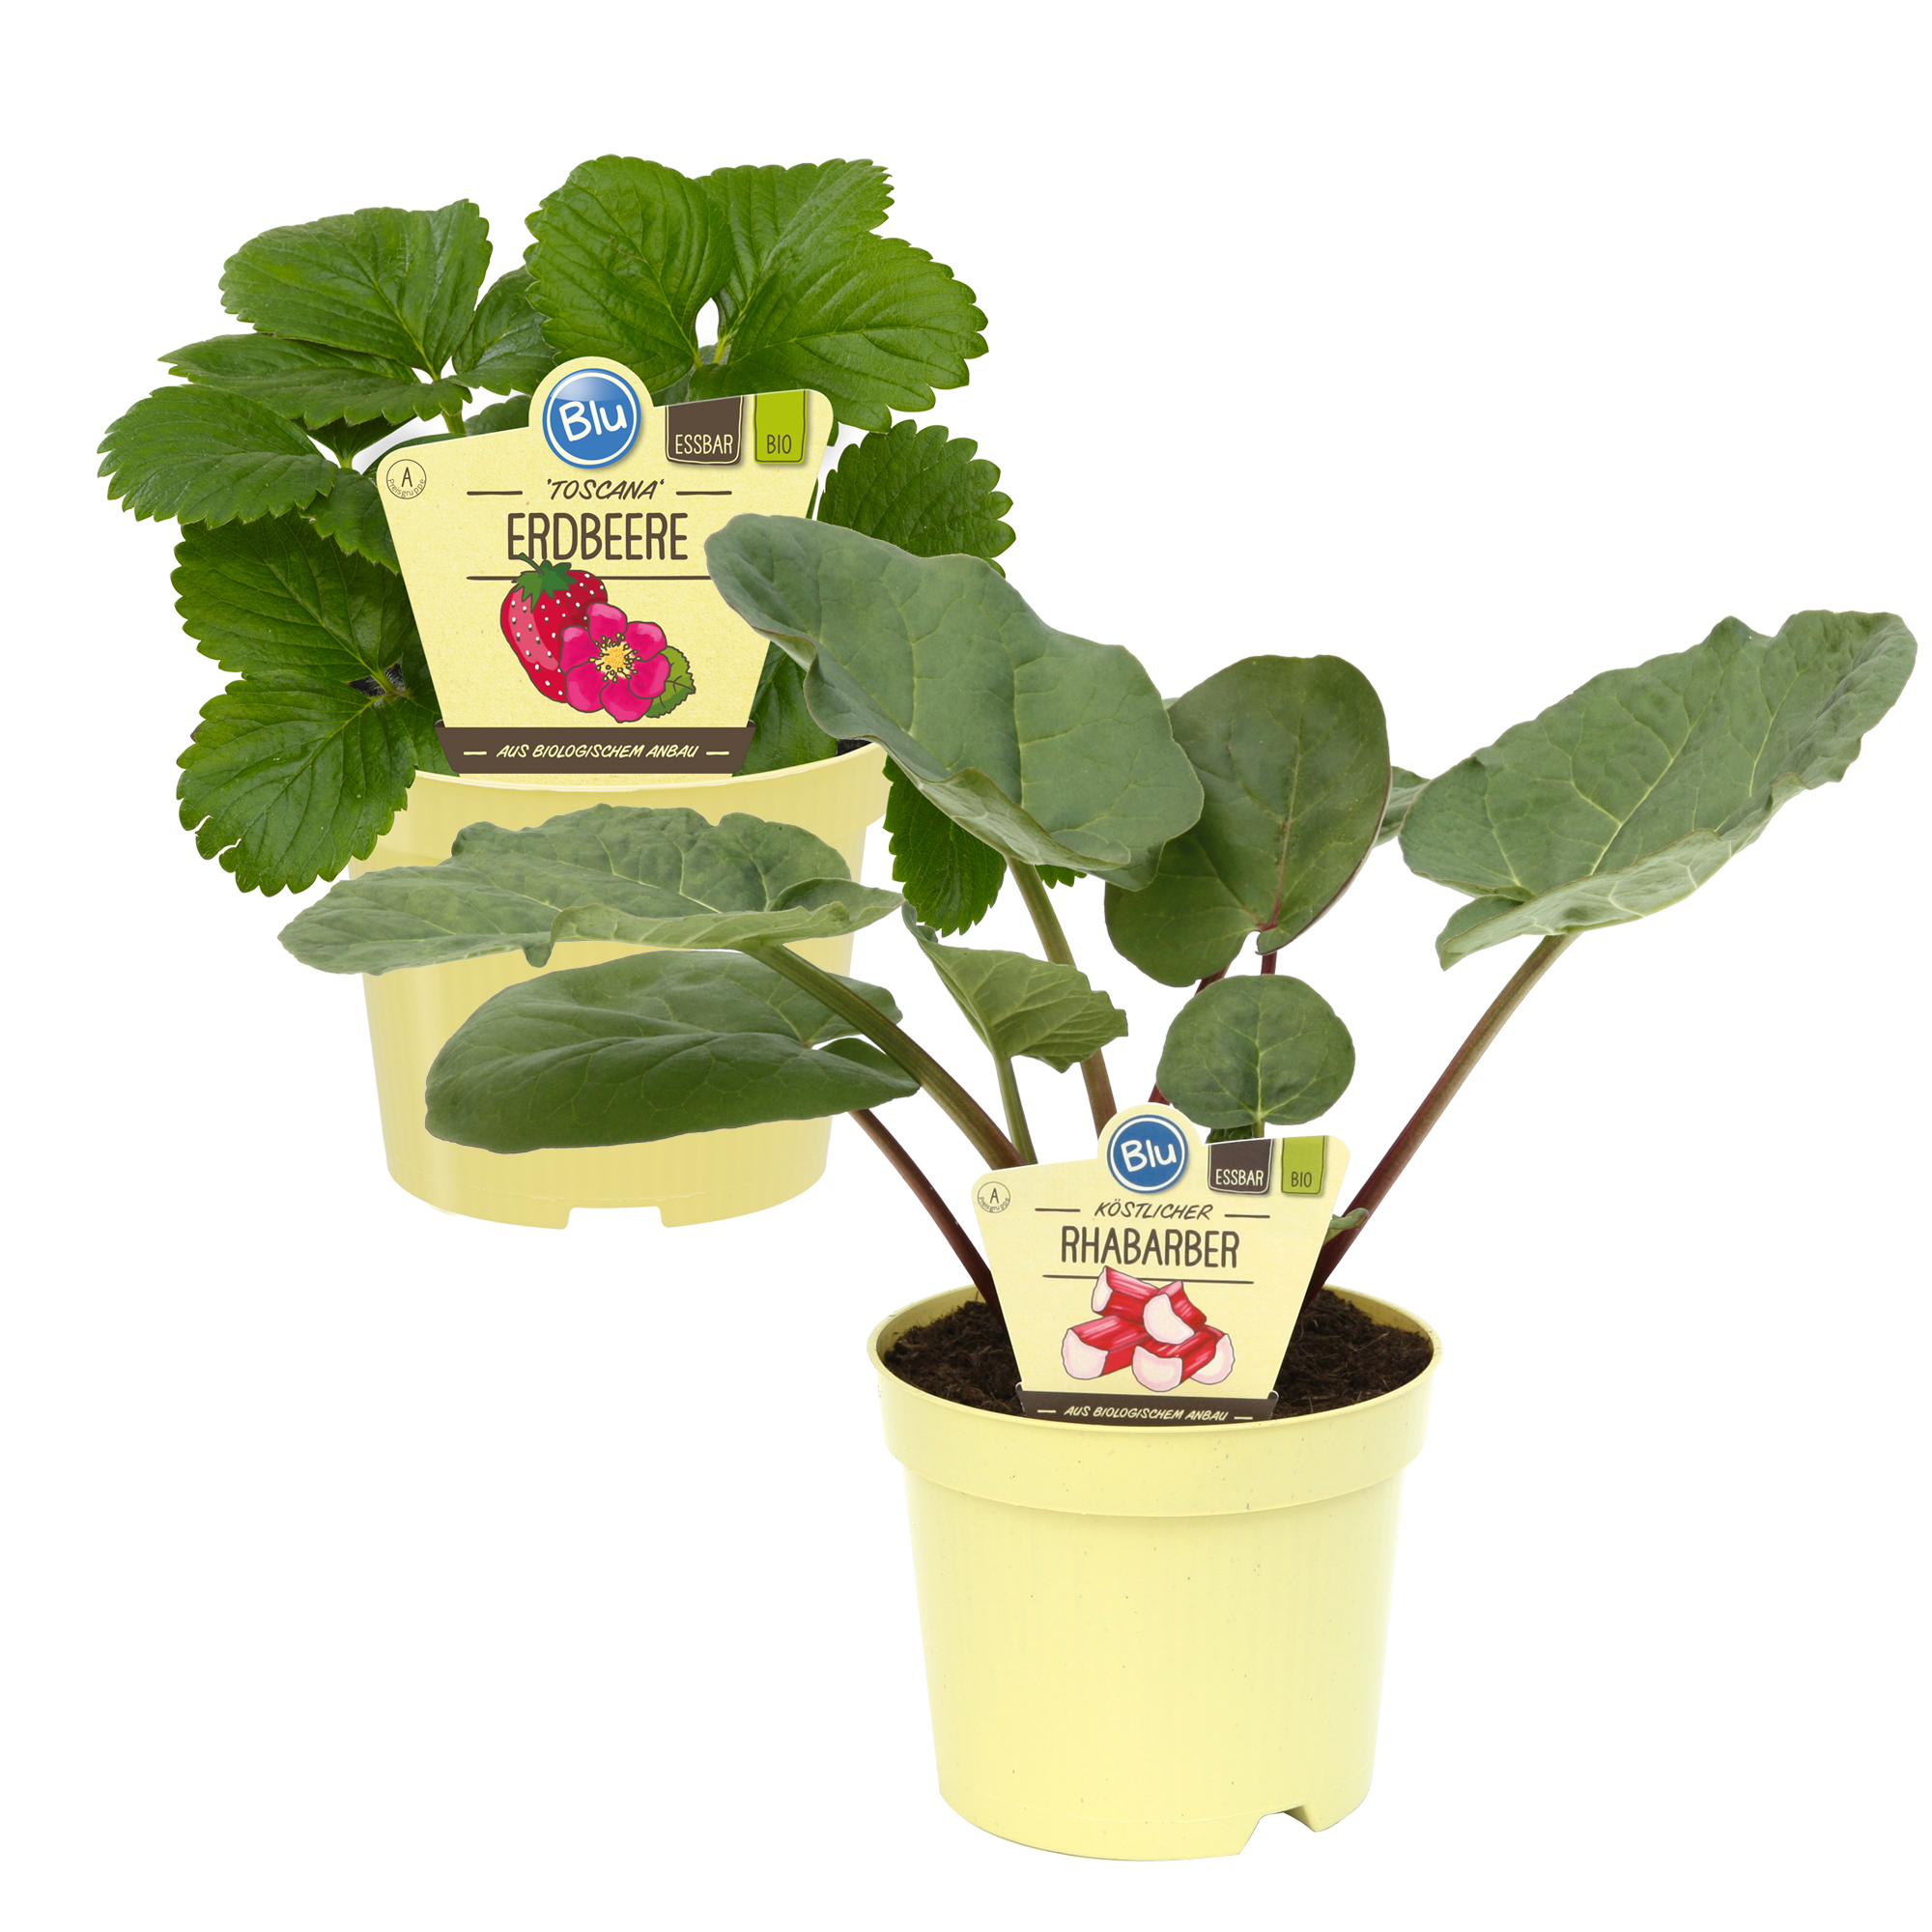 Bio-Erdbeere und Bio-Rhabarber 12 cm Topf, 3er-Set + product picture